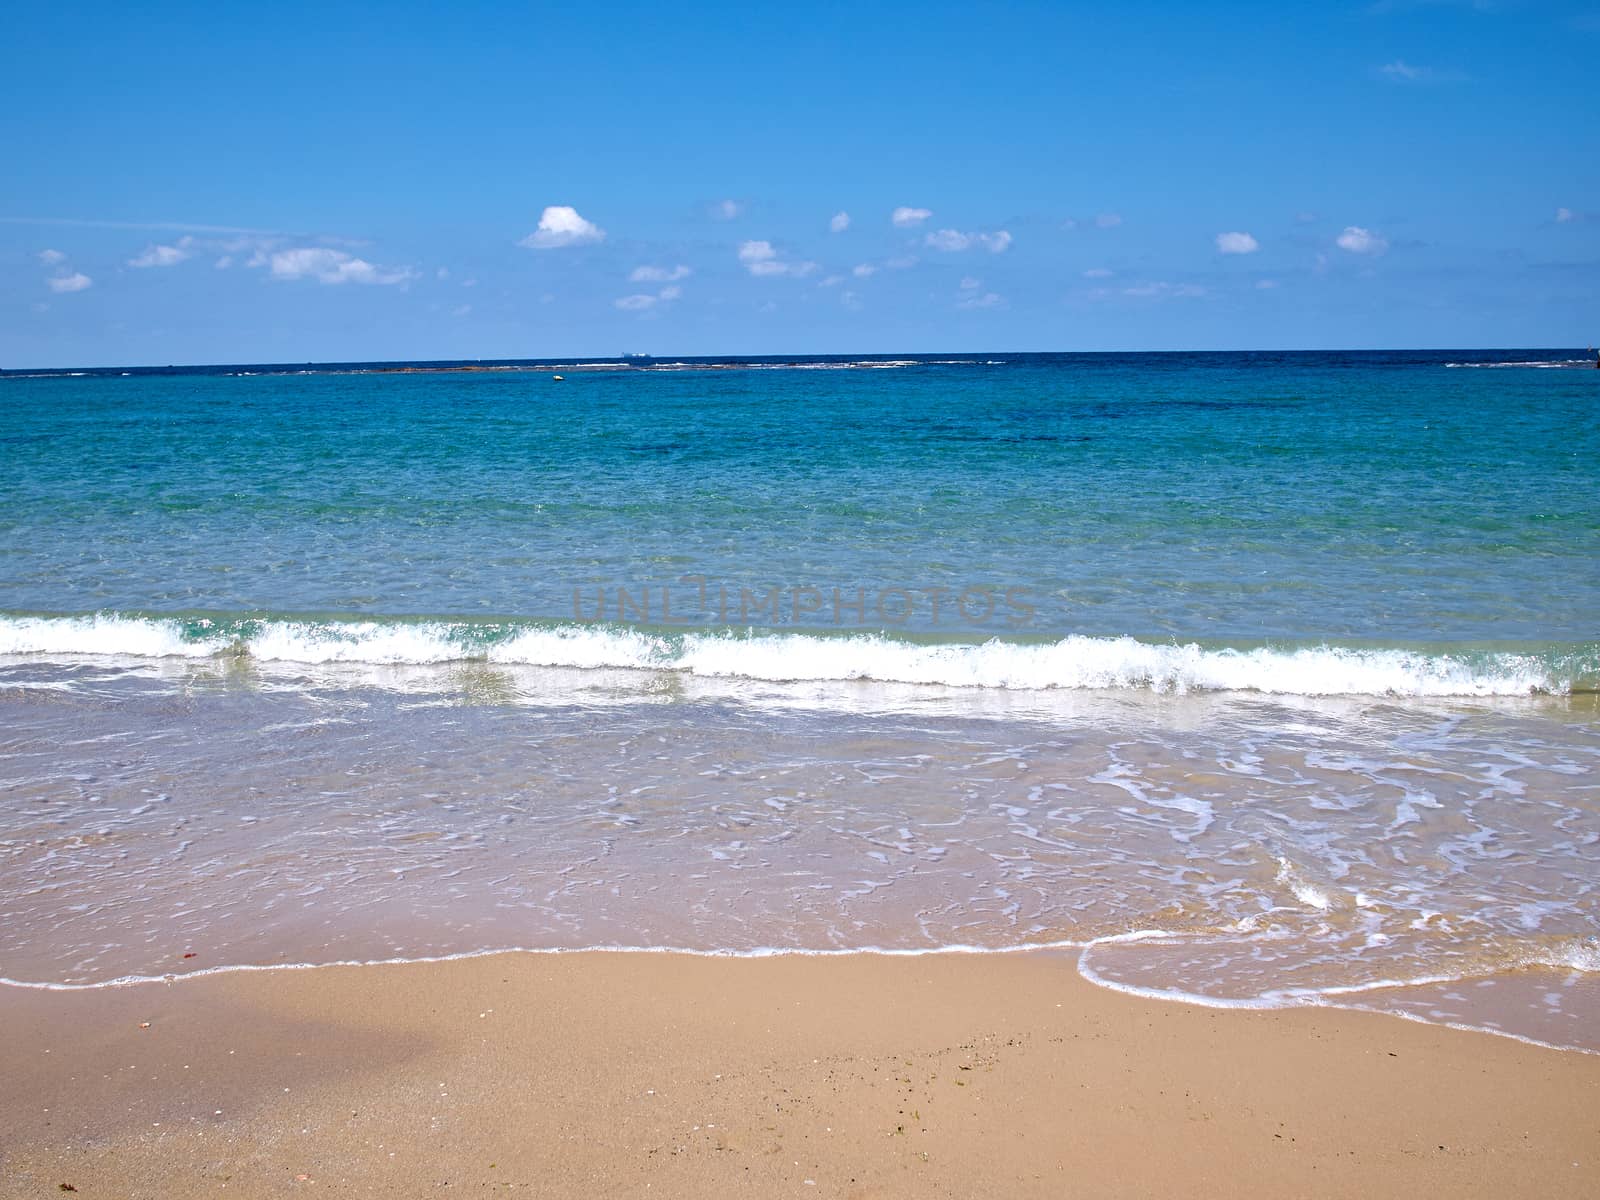 Perfect beach coast resort summer vacation background image